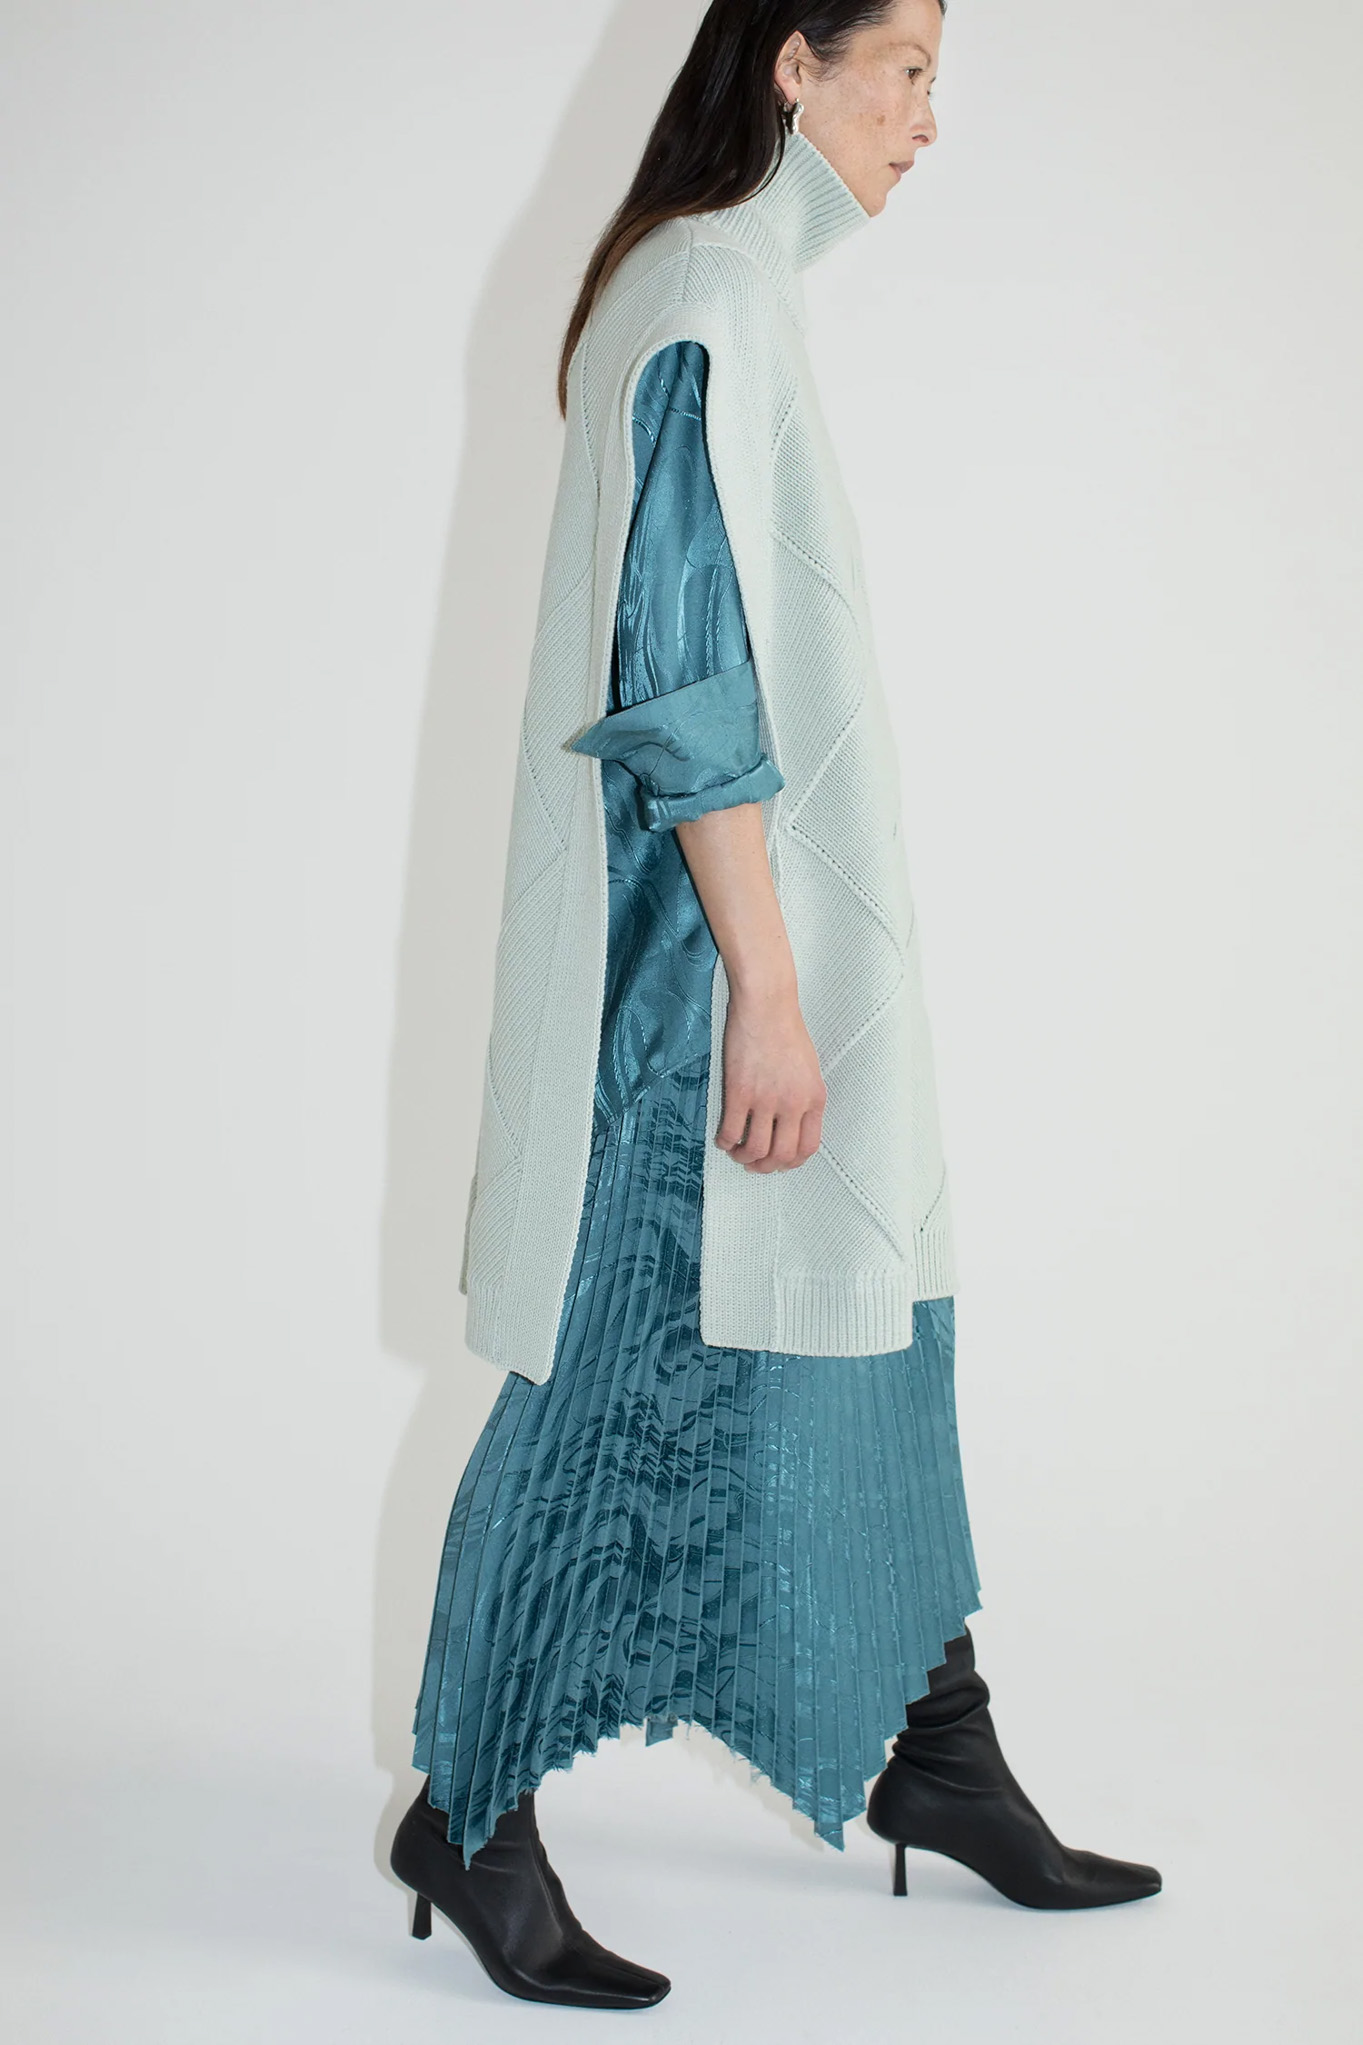 japan-minimalchic-fashion-brand-top5s-blog08